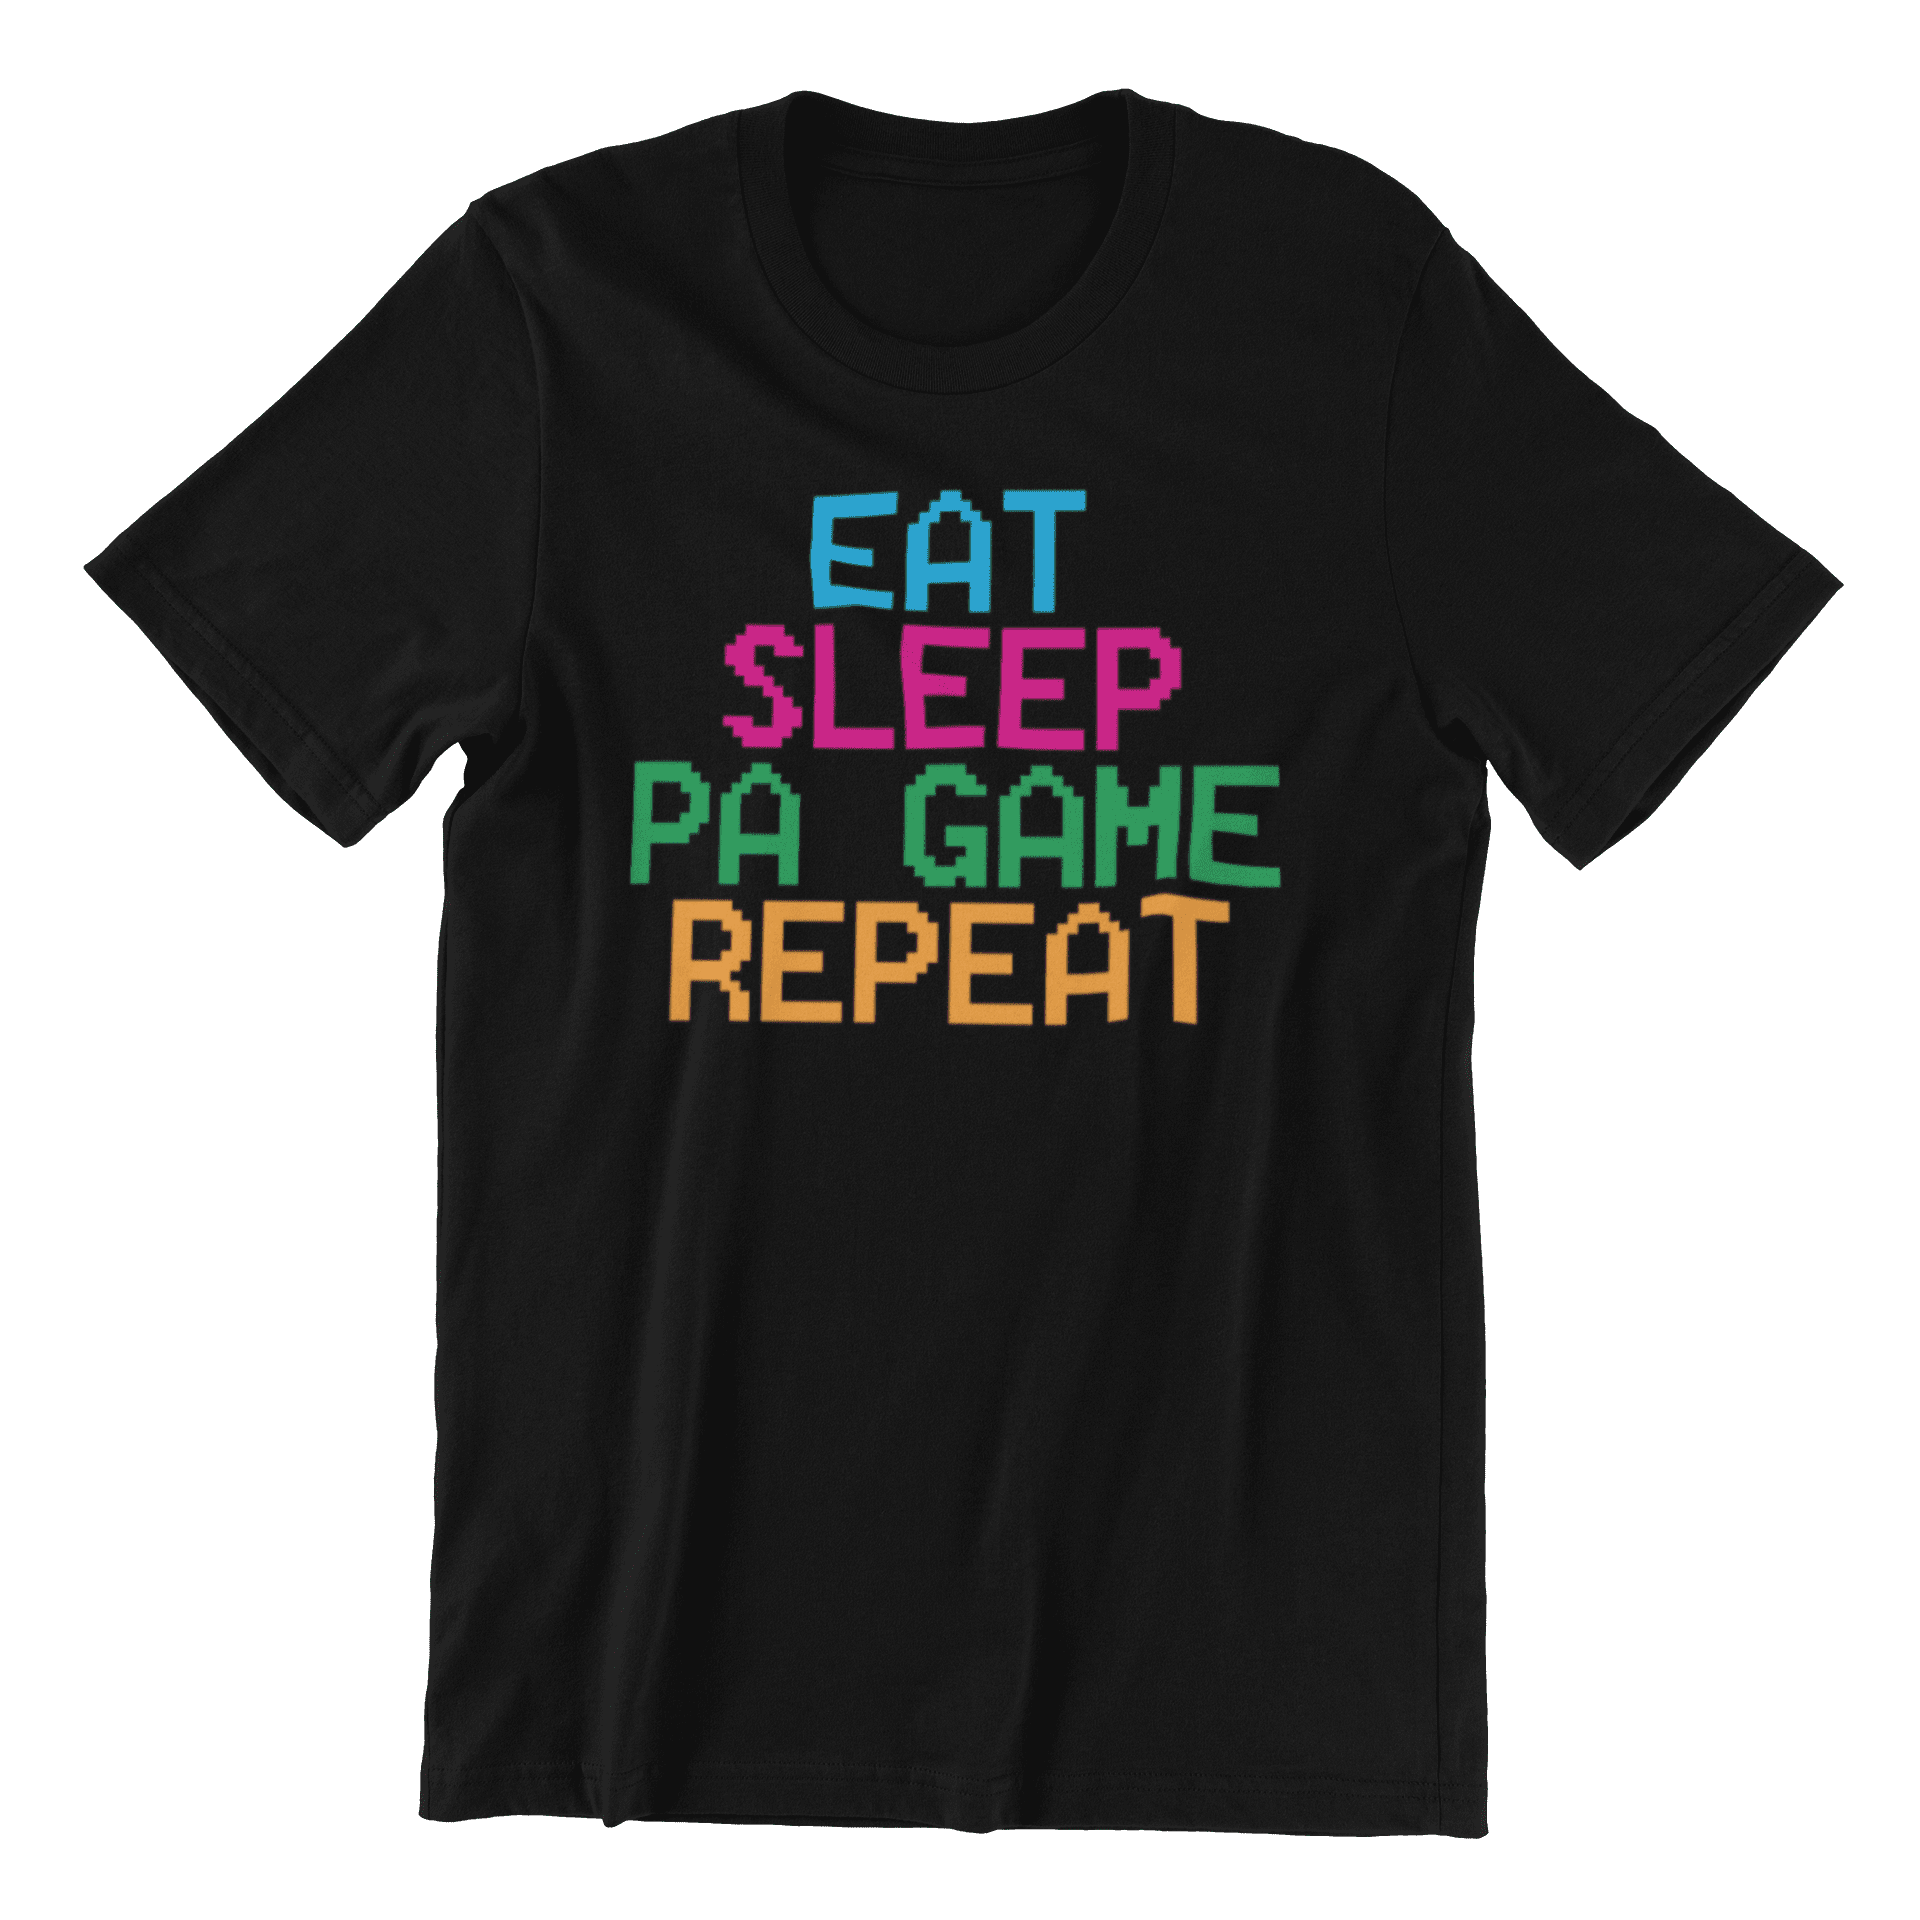 Eat Sleep Pa Game Repeat Crew Neck S-Sleeve T-shirt